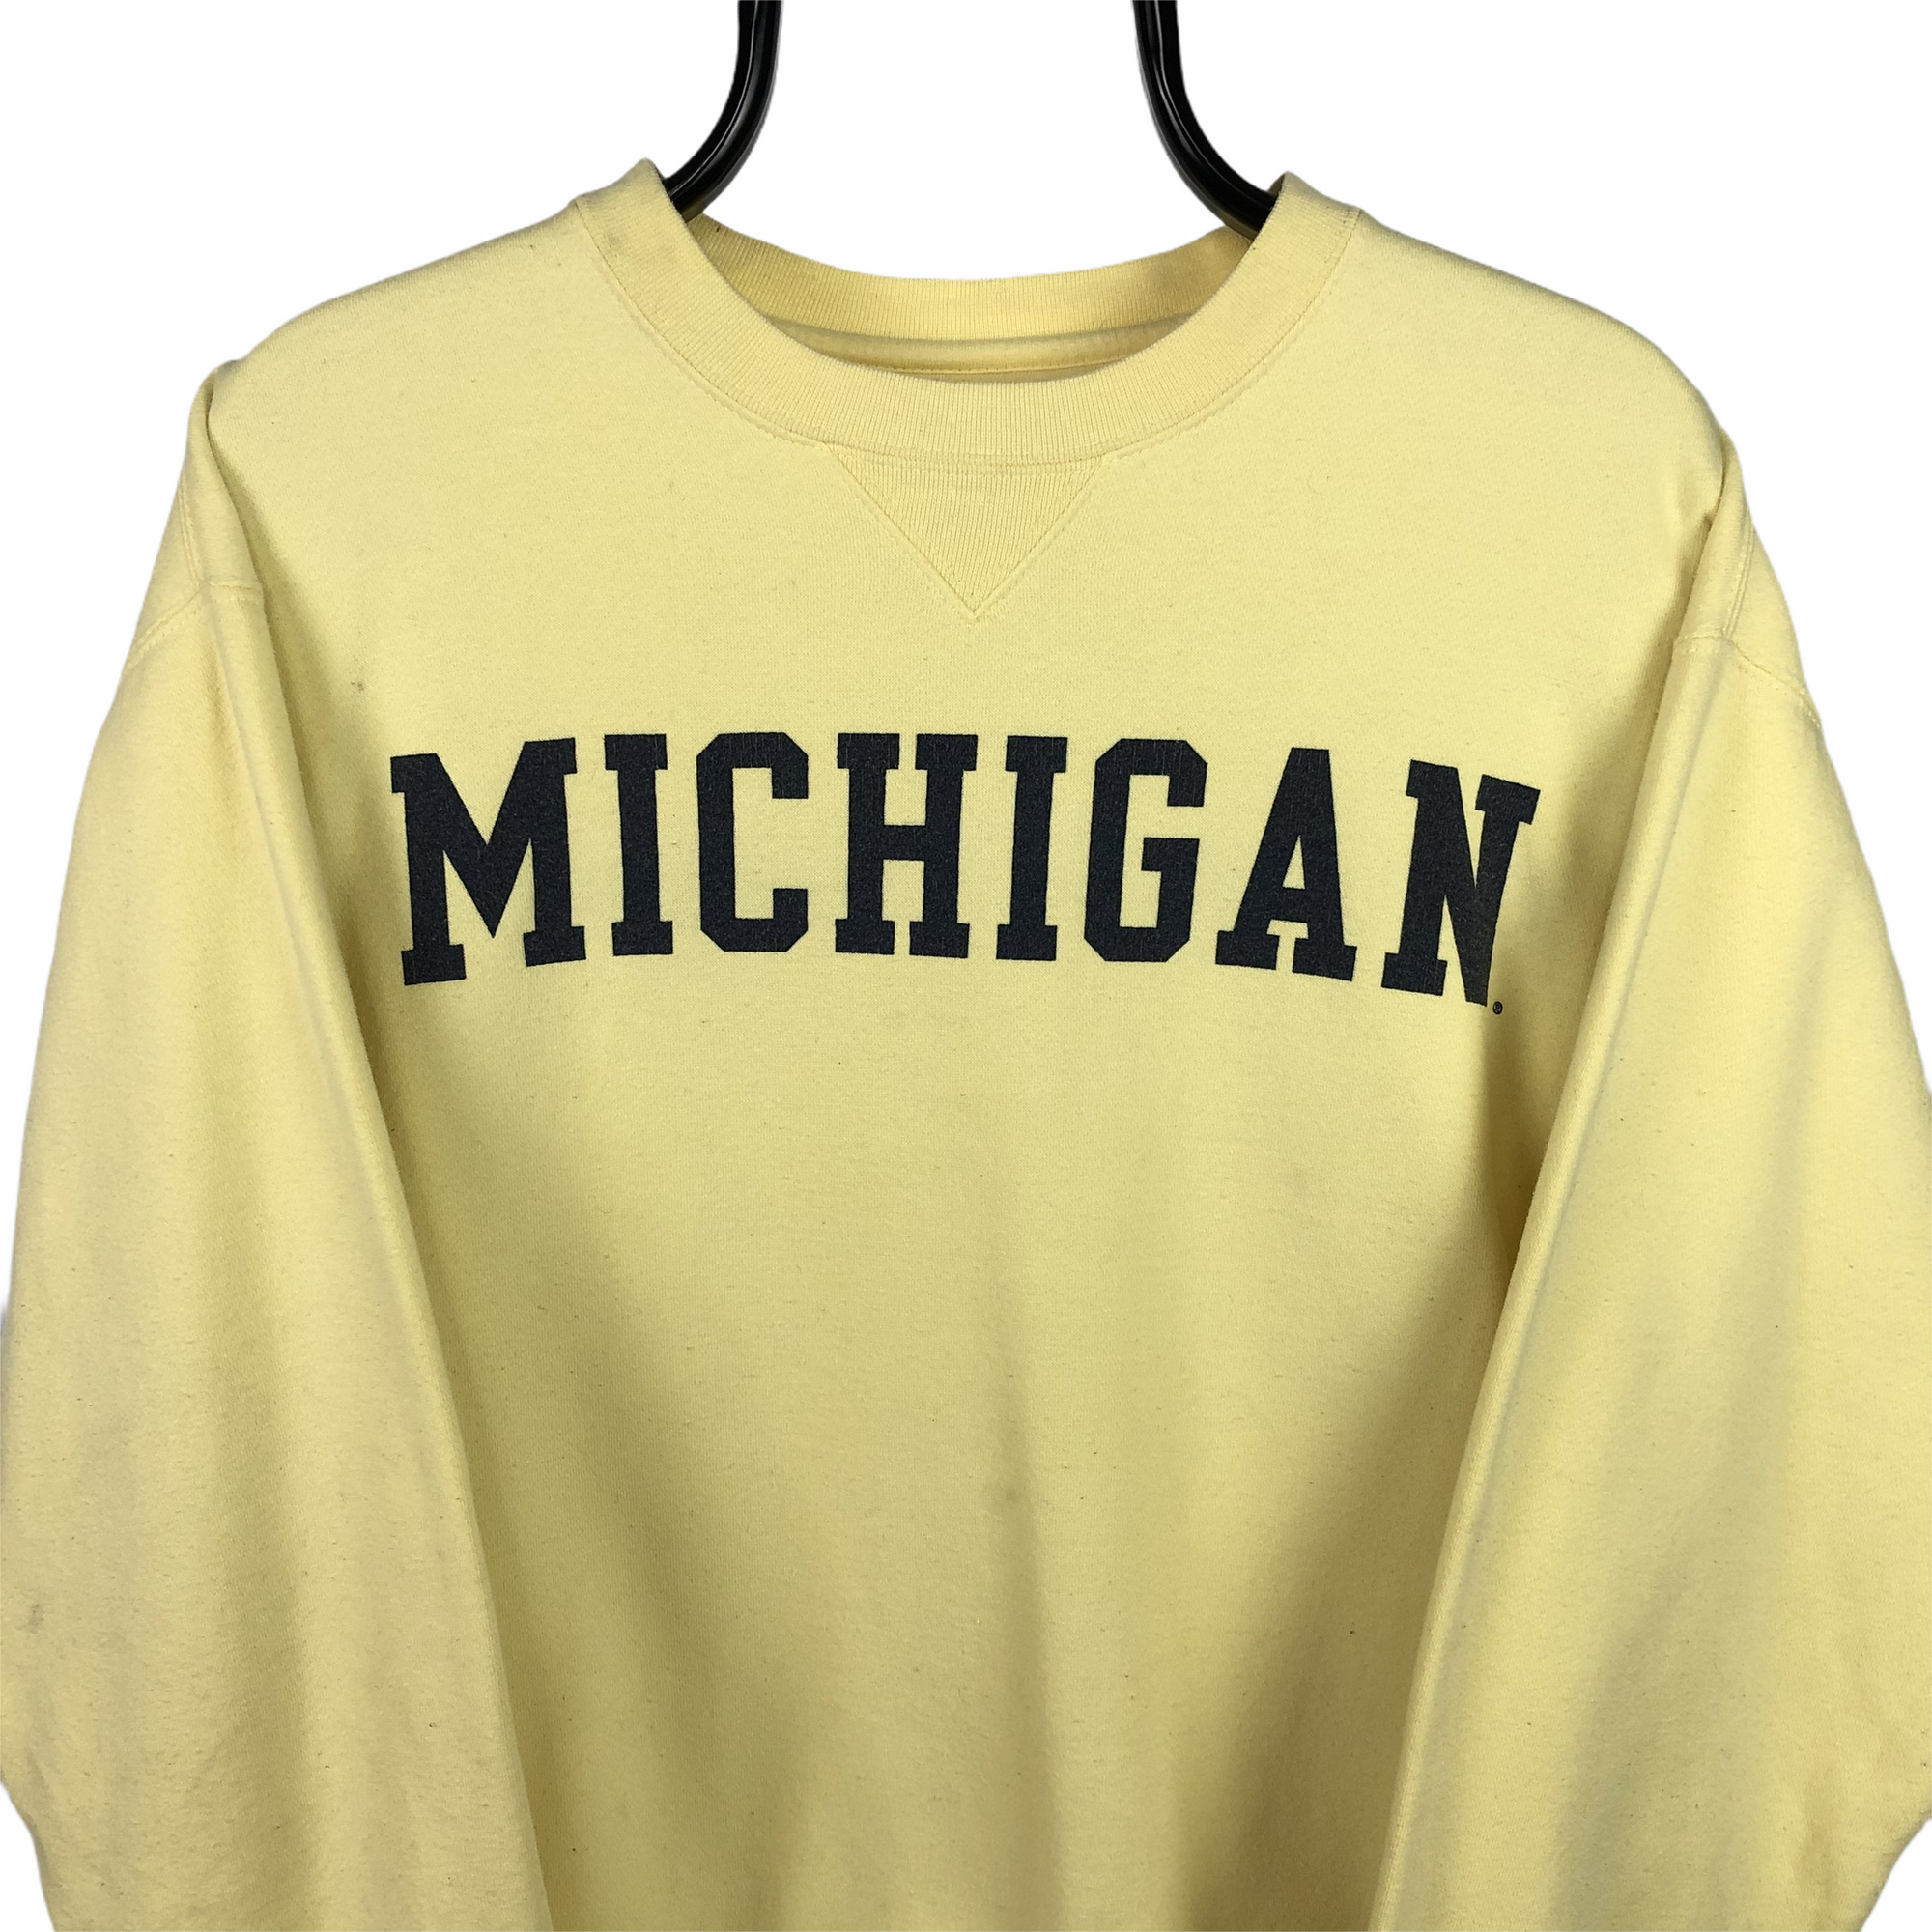 Vintage Michigan US College Sweatshirt - Men's Small/Women's Medium